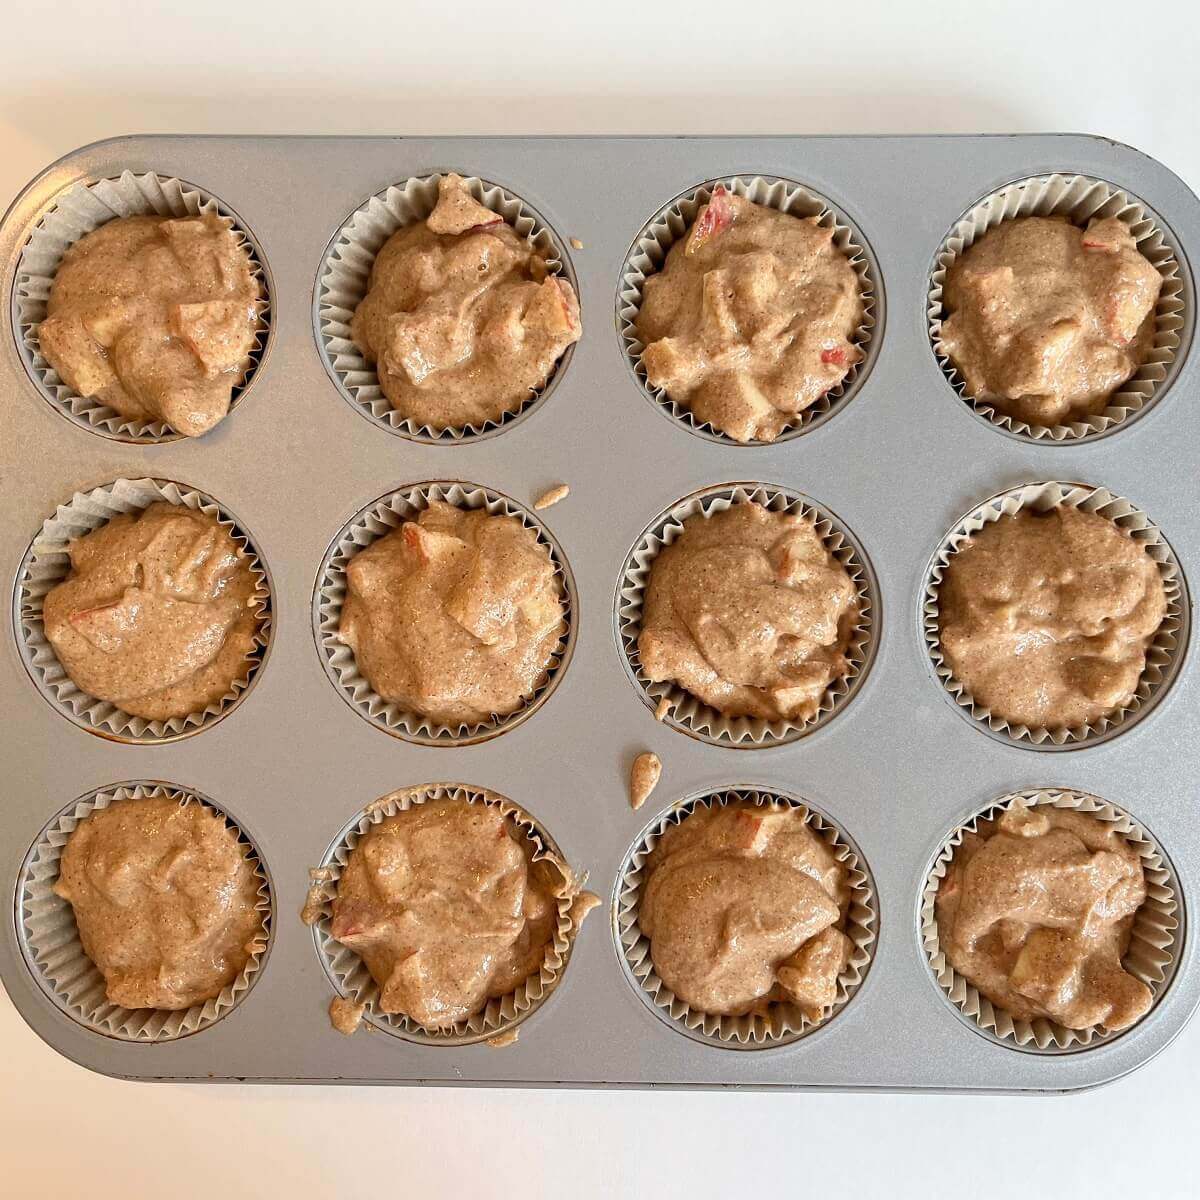 Raw apple muffins in a metal baking pan.